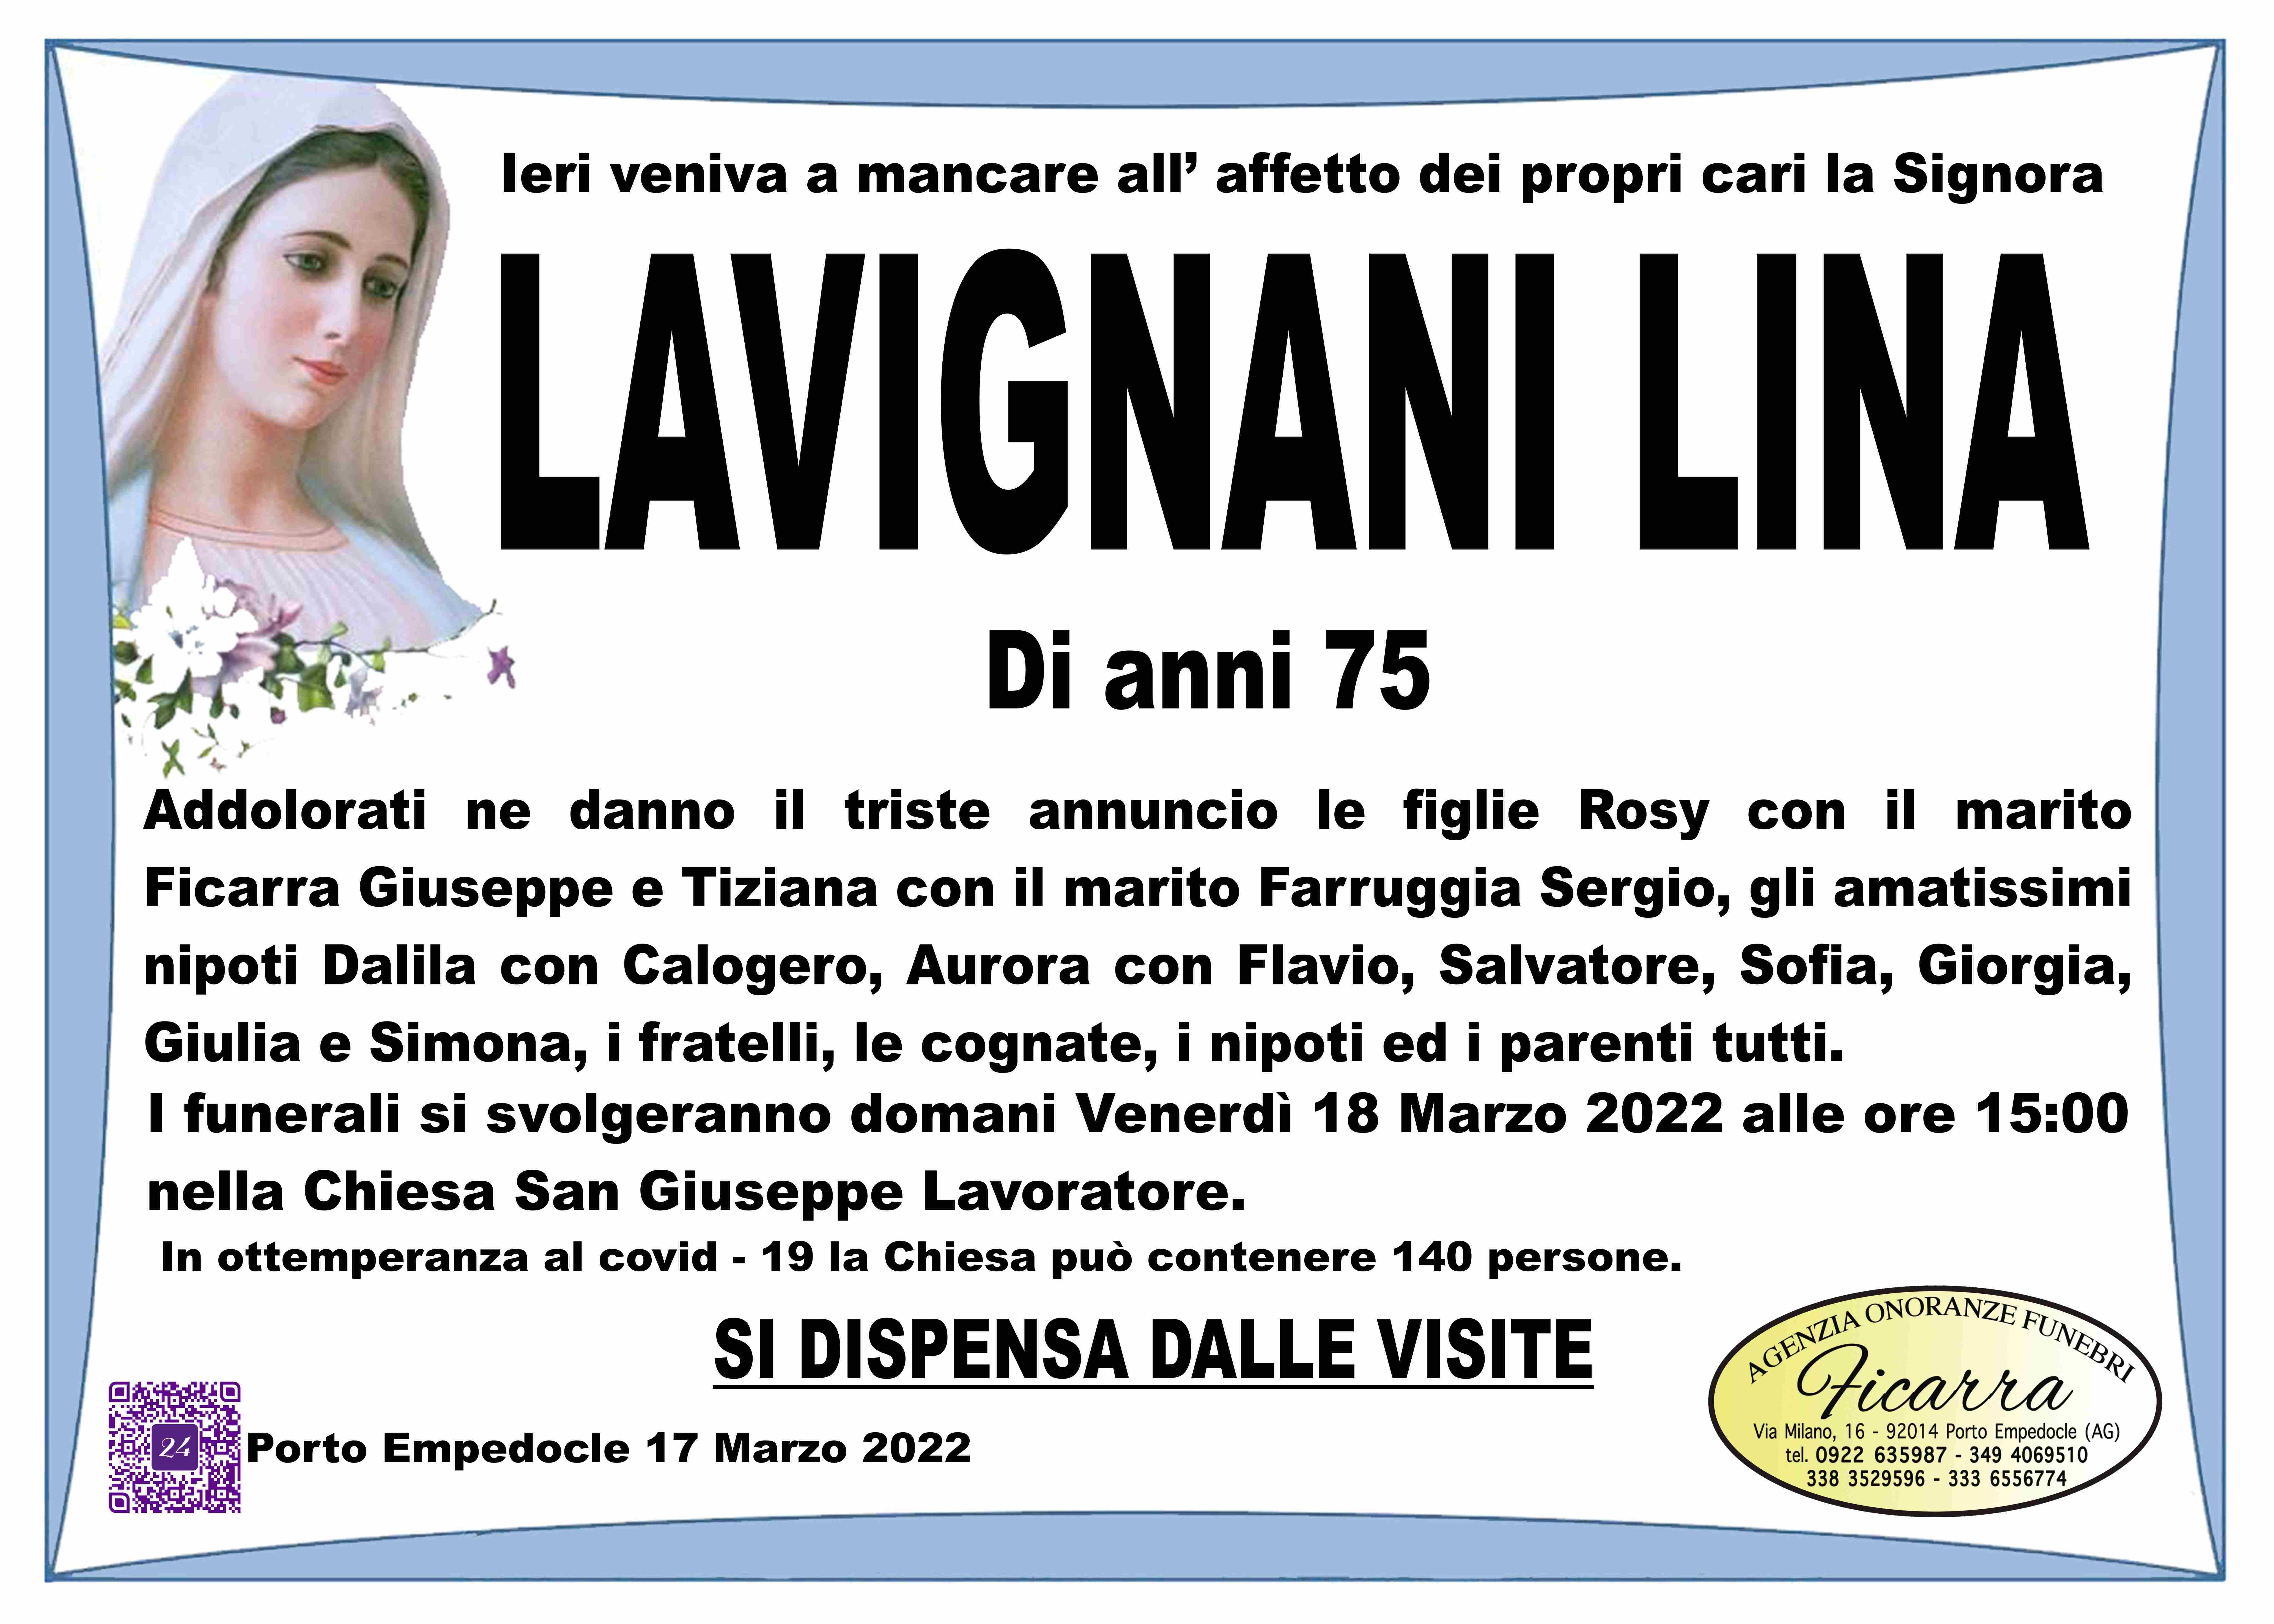 Angelina Lavignani